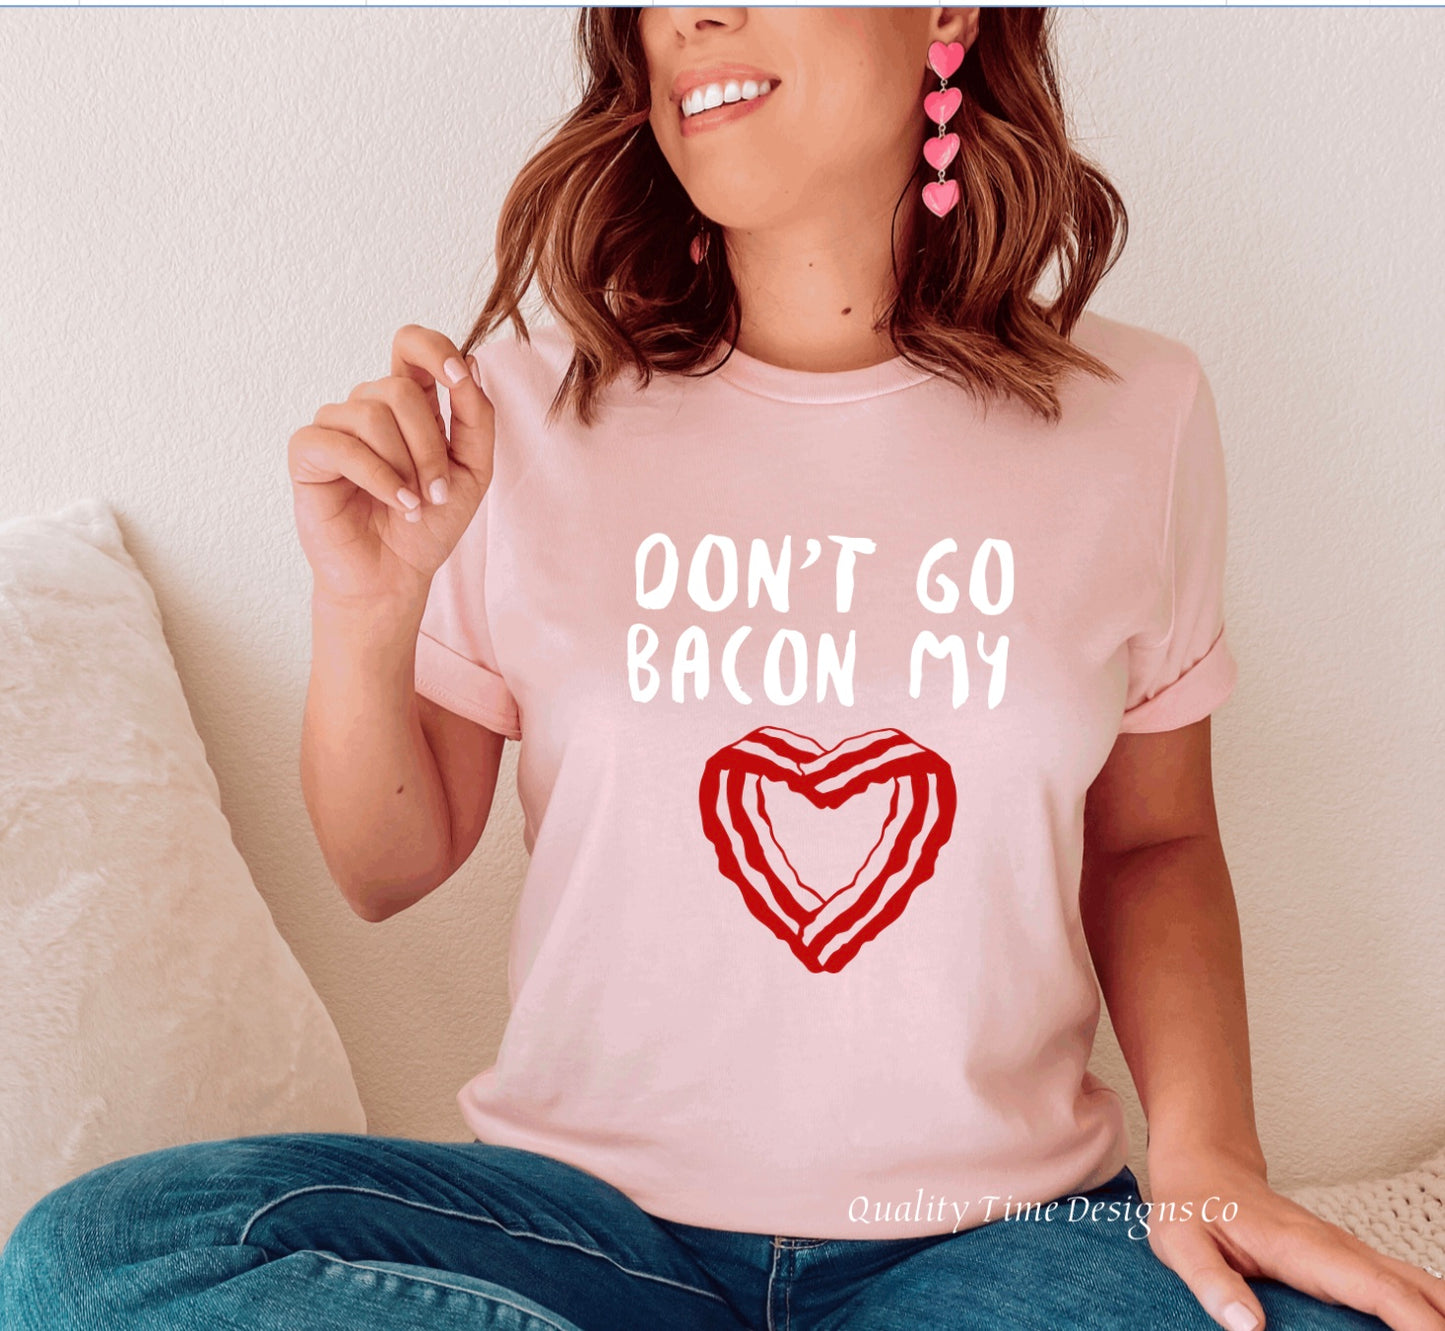 Don’t go bacon my heart t-shirt 